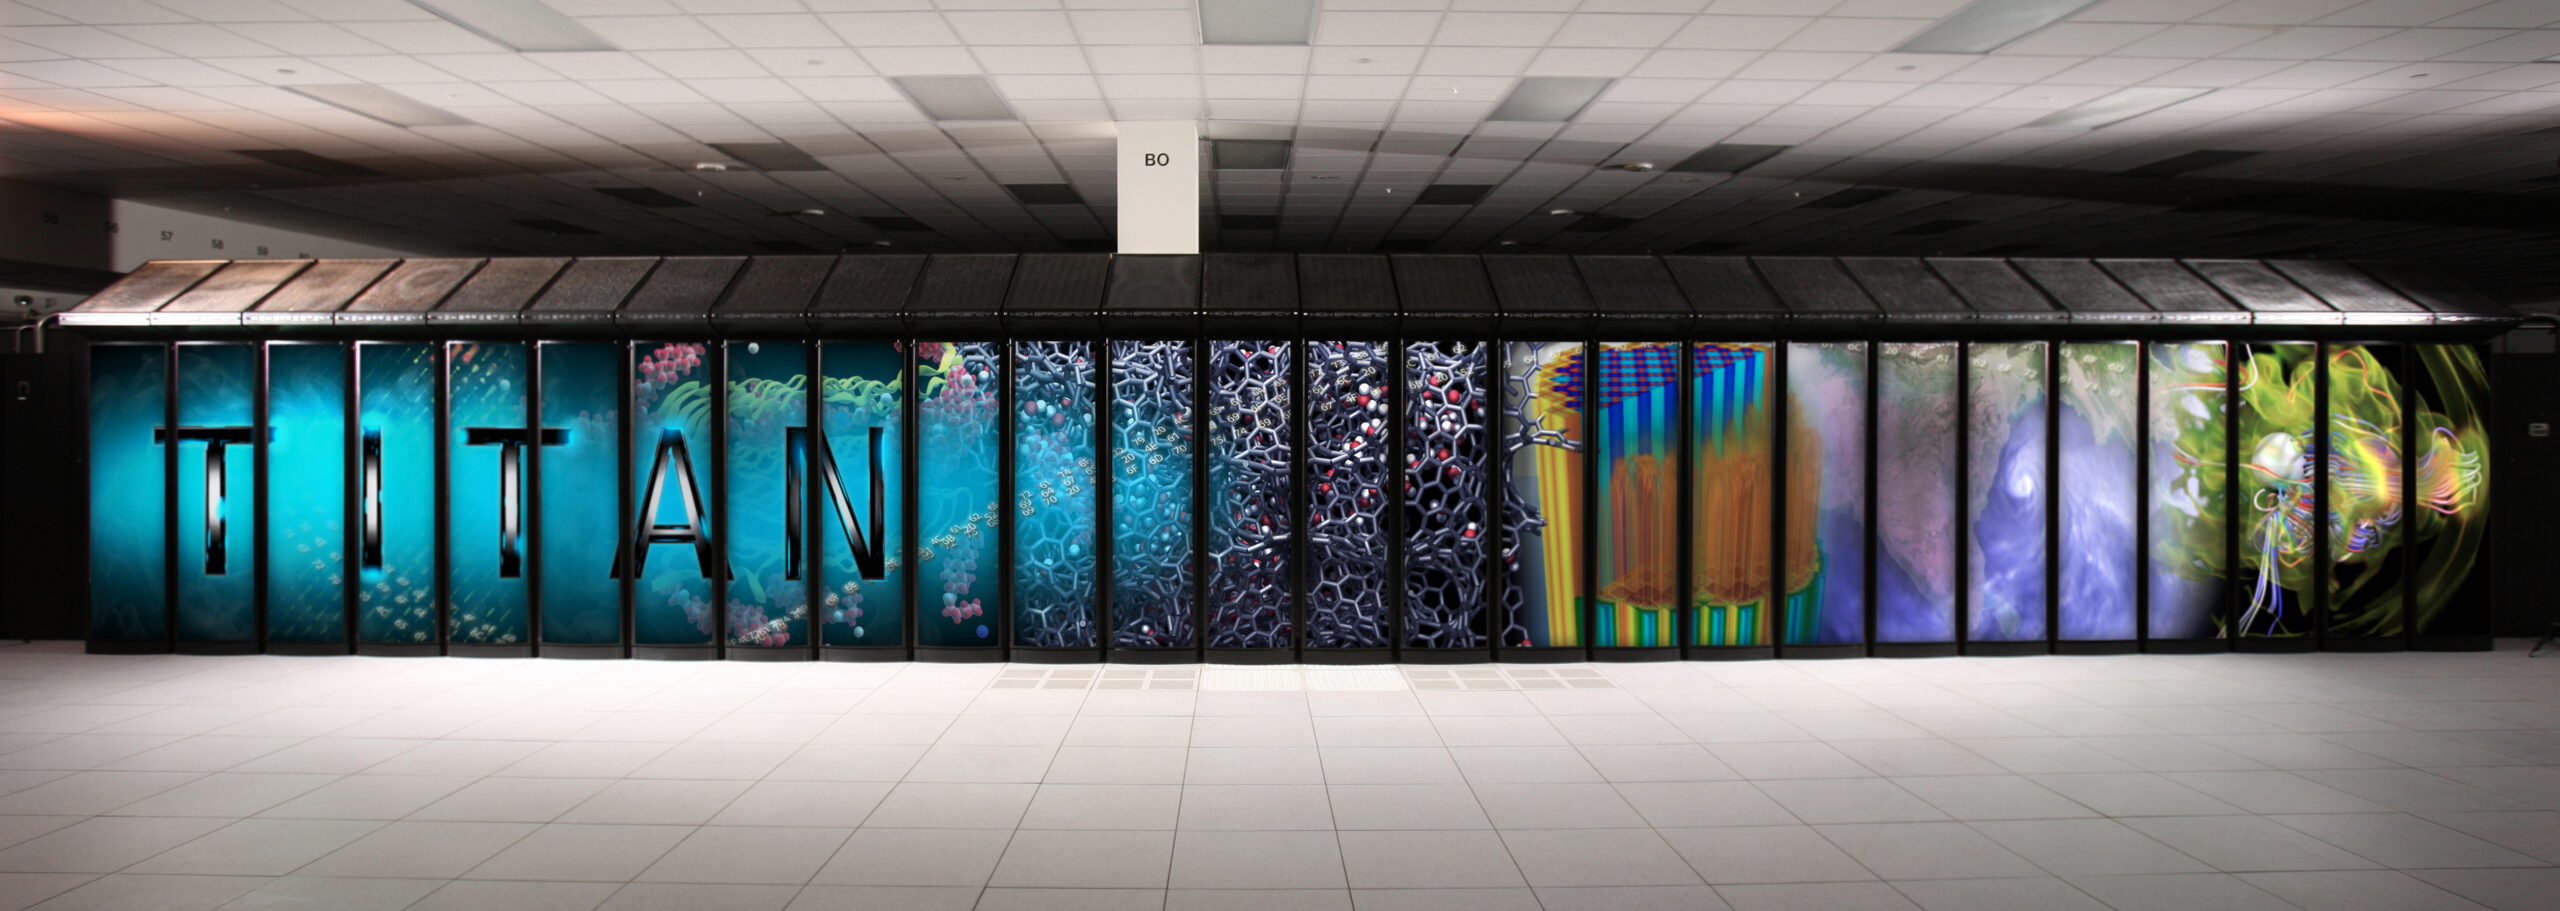 CRAY TITAN Supercomputer at Oak Ridge National Laboratories